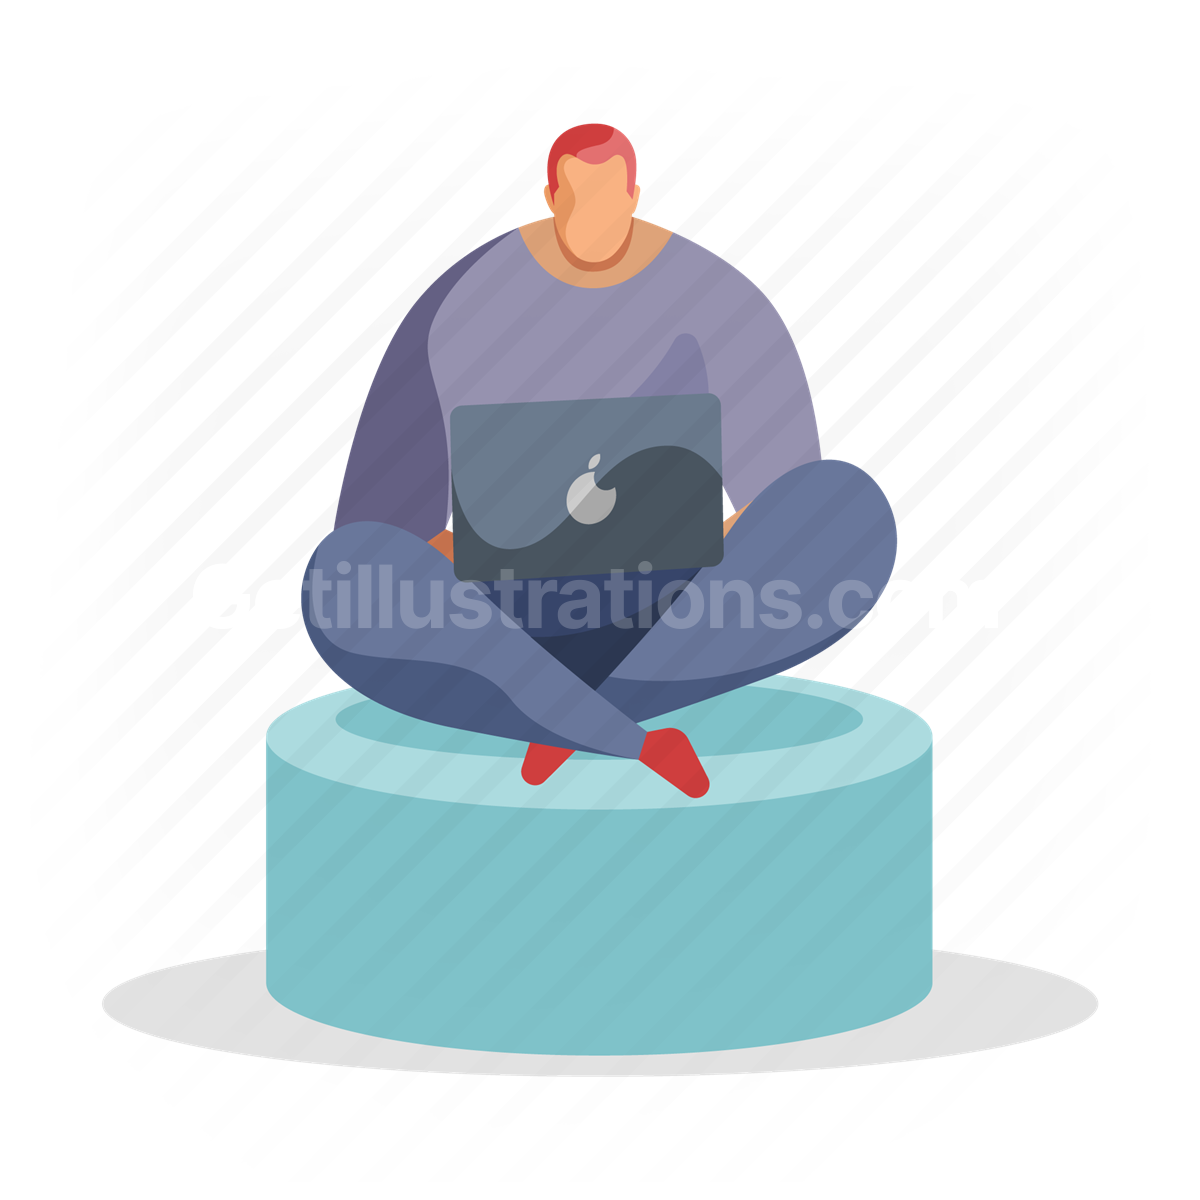 man, cross legged, sit, laptop, computer